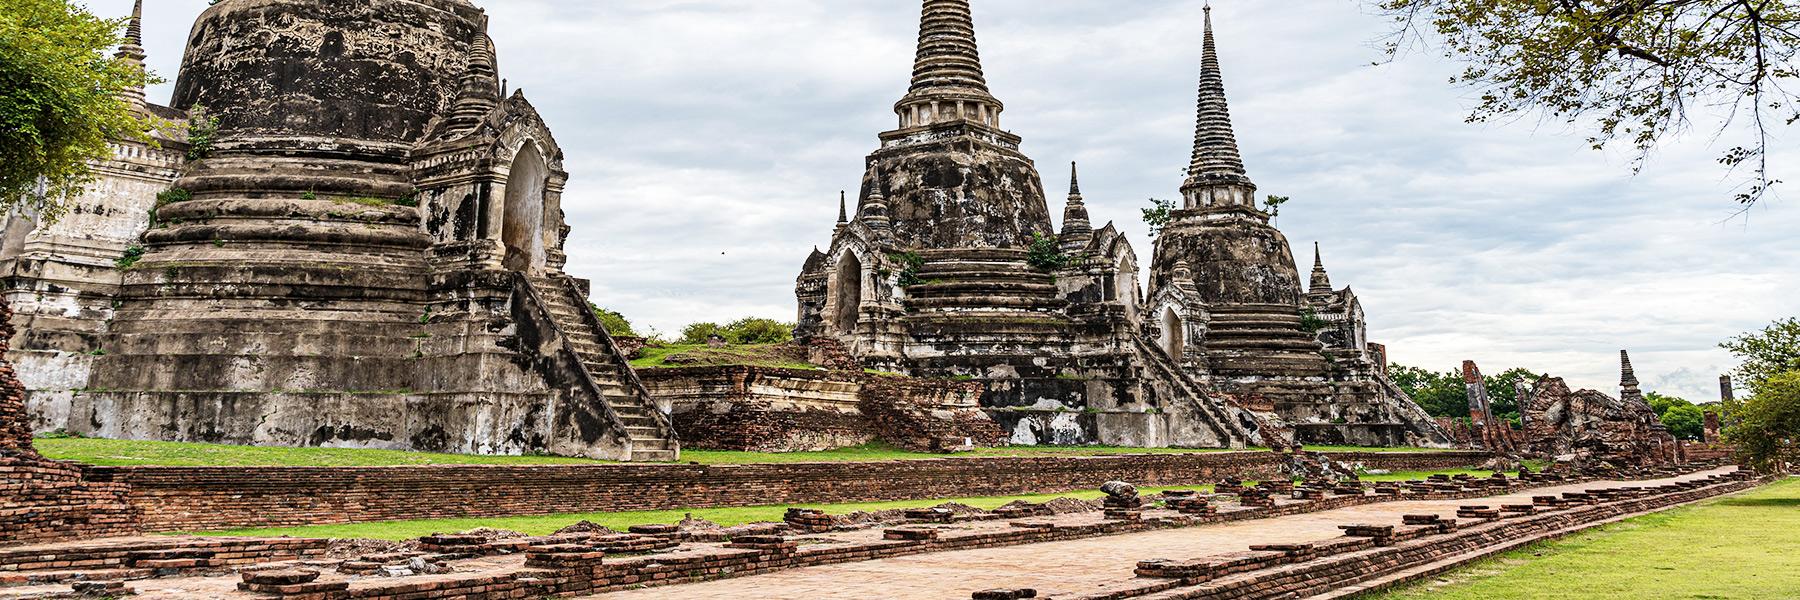 Why Visit Ayutthaya?